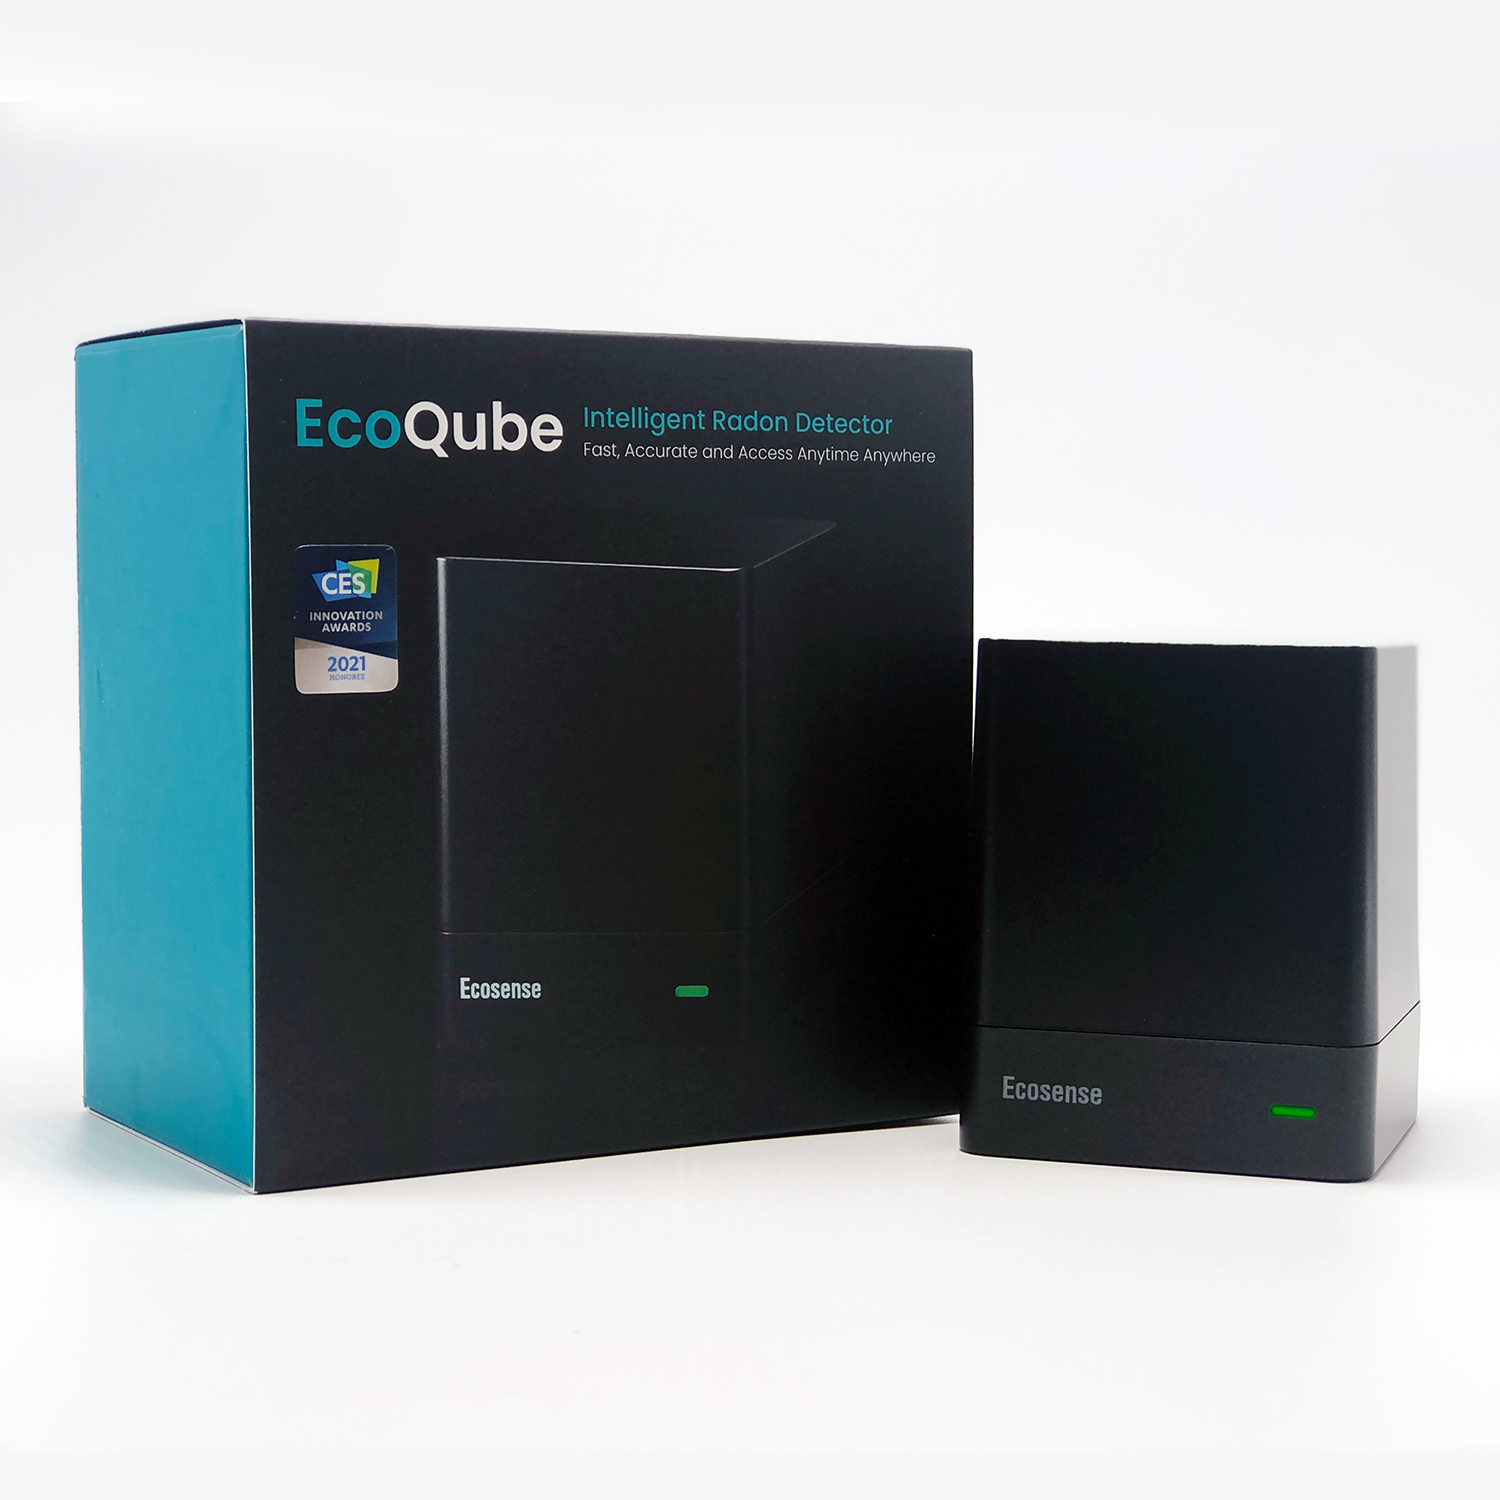 EcoQube digital radon detector for home, modern and slim design, matched your home interior 